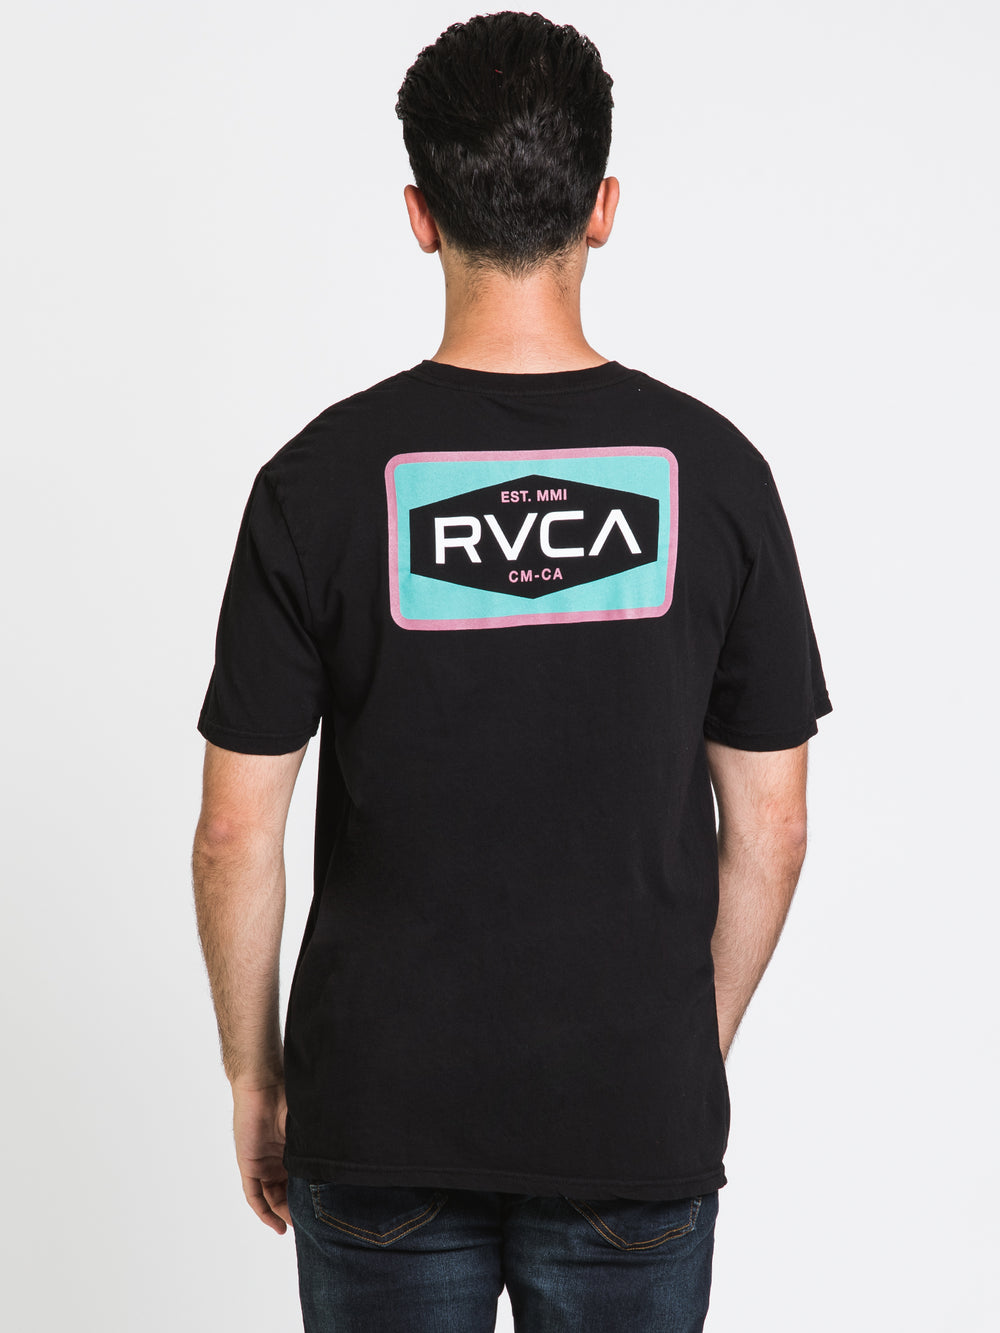 RVCA VA PIT STOP T-SHIRT - CLEARANCE